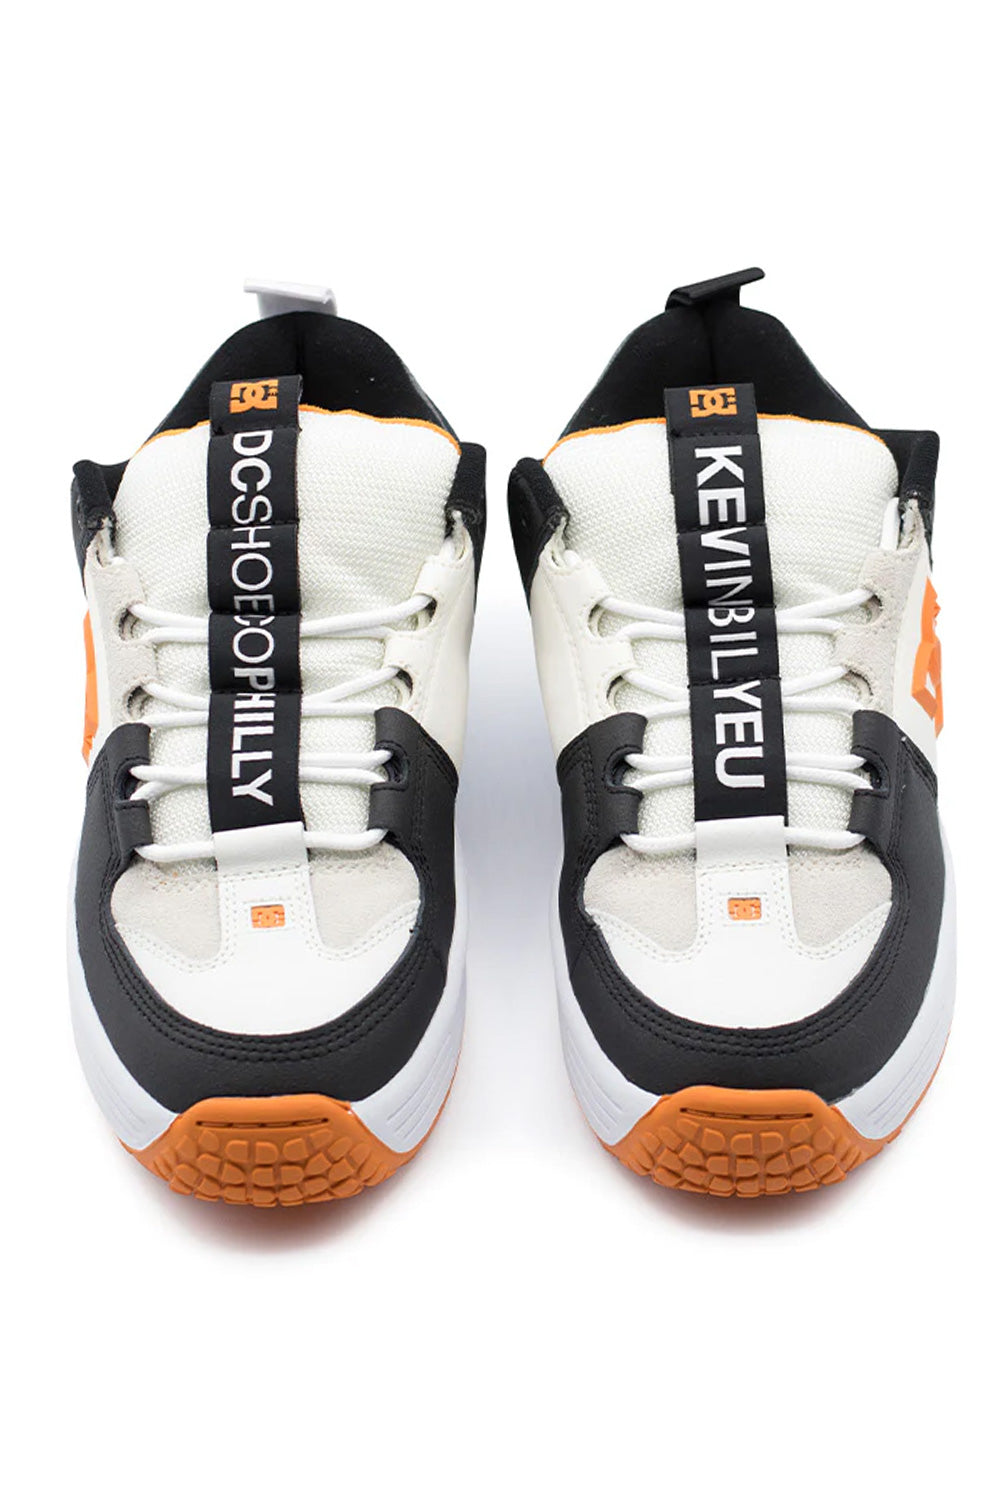 DC Shoes Lynx OG Shoe (Kevin Bilyeu) Black / Orange - BONKERS